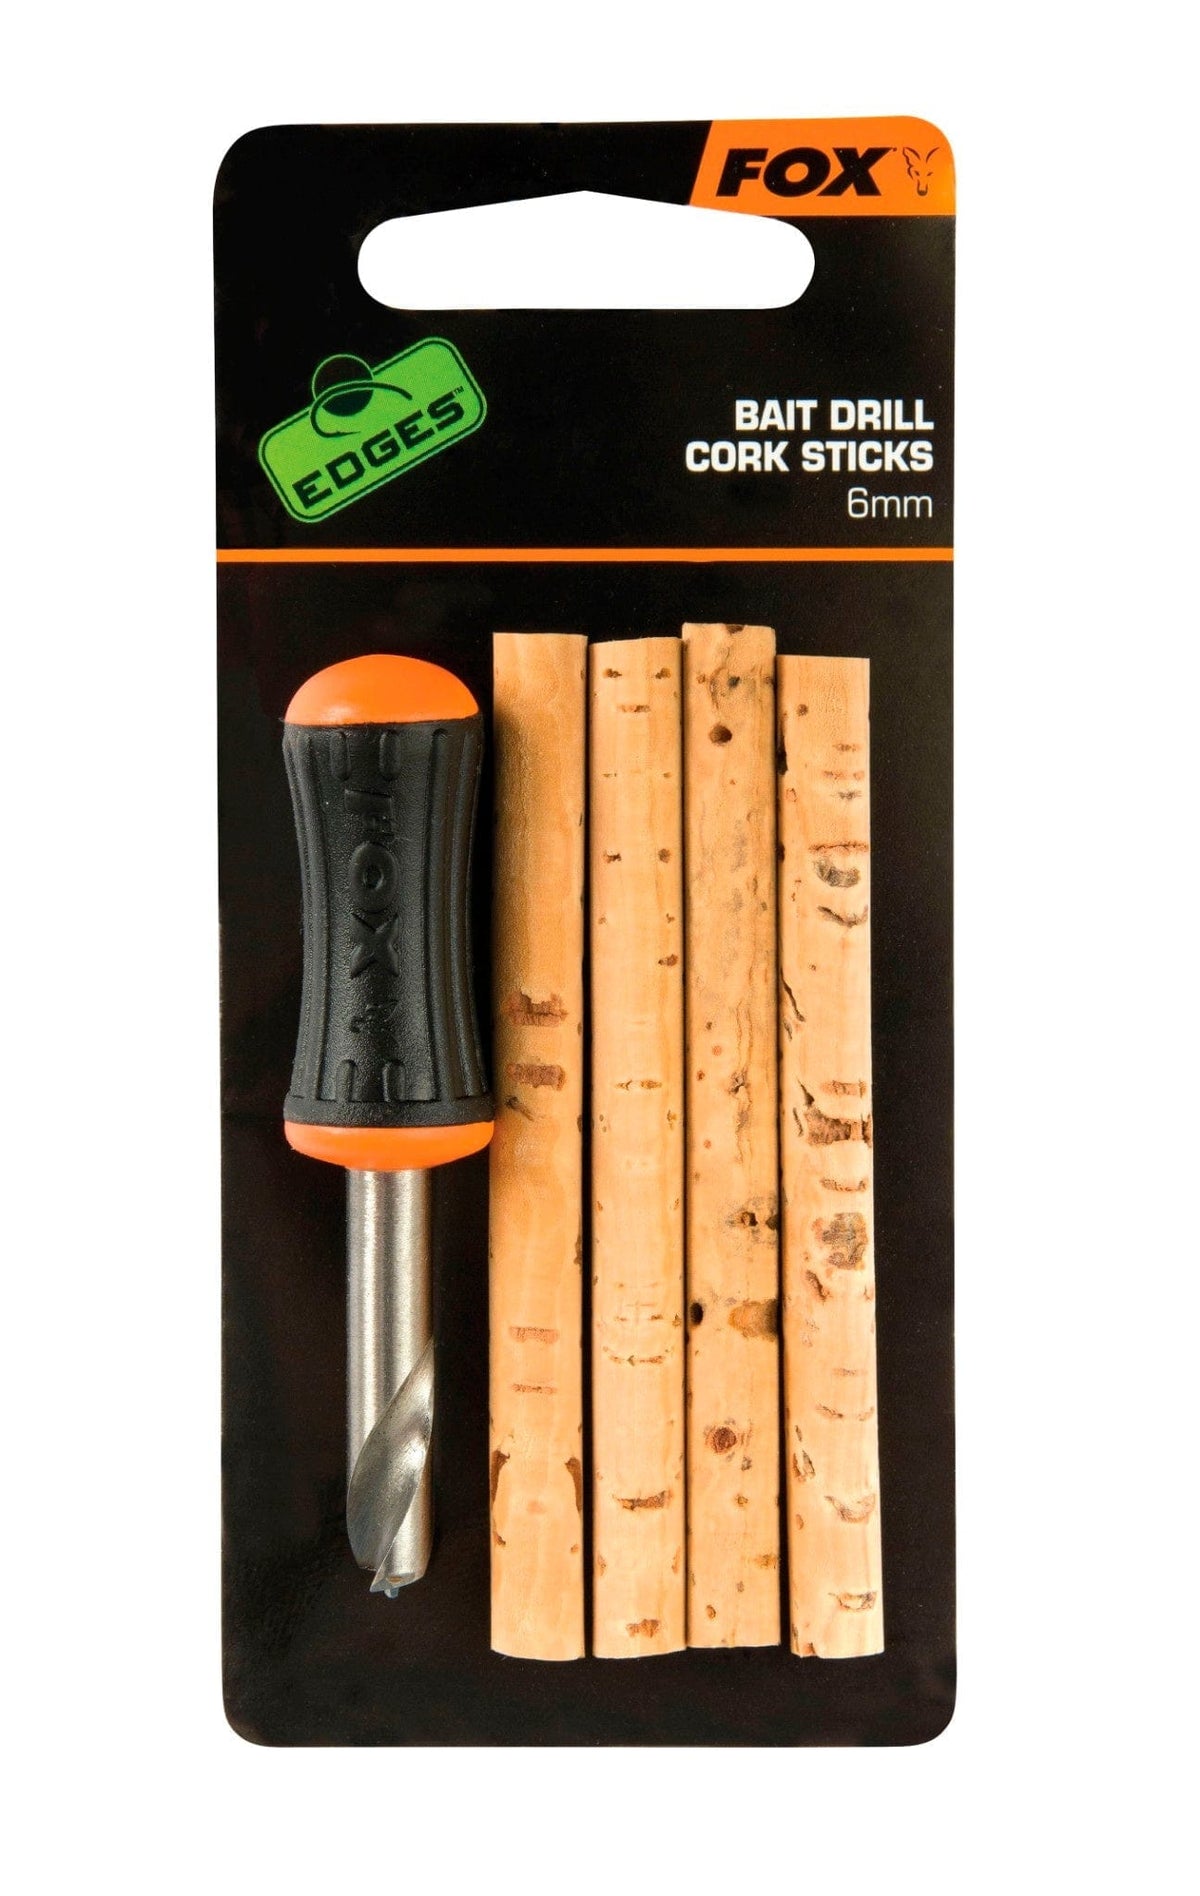 FOX Edges Bait Drill &amp; Cork sticks - 6mm.